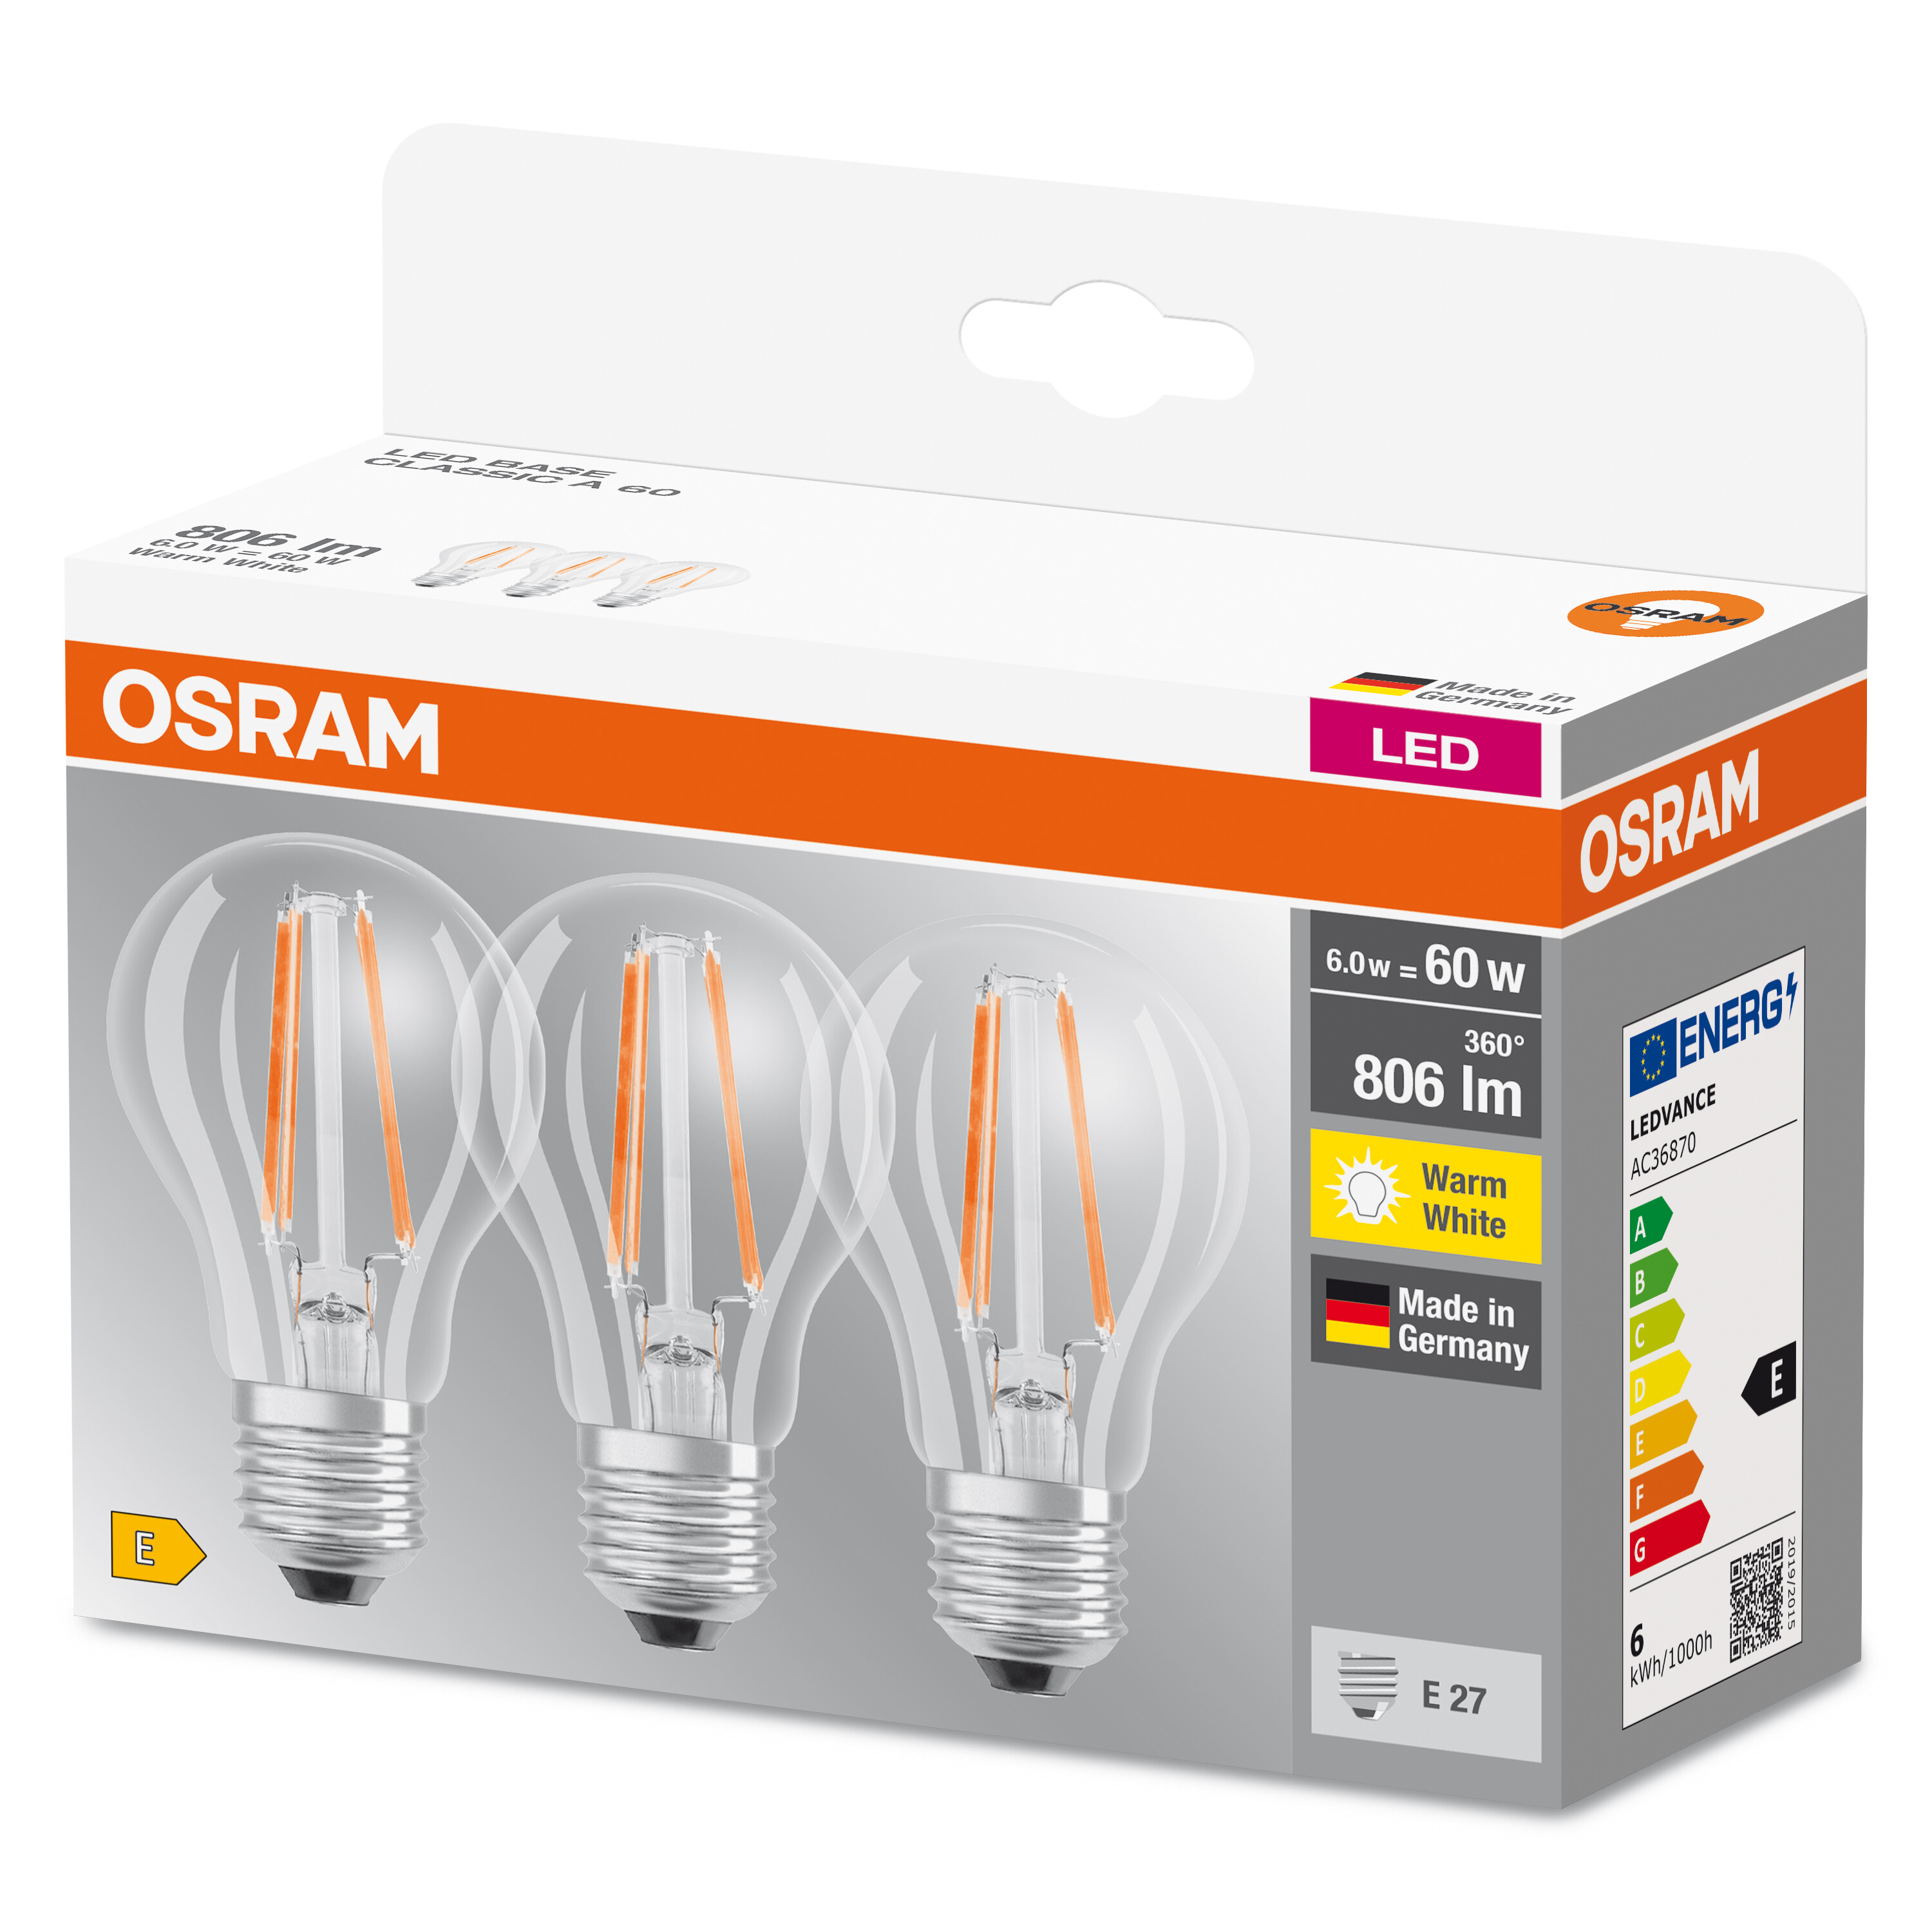 Lampe LED Warmweiß BASE CLASSIC A 806 LED OSRAM  Lumen